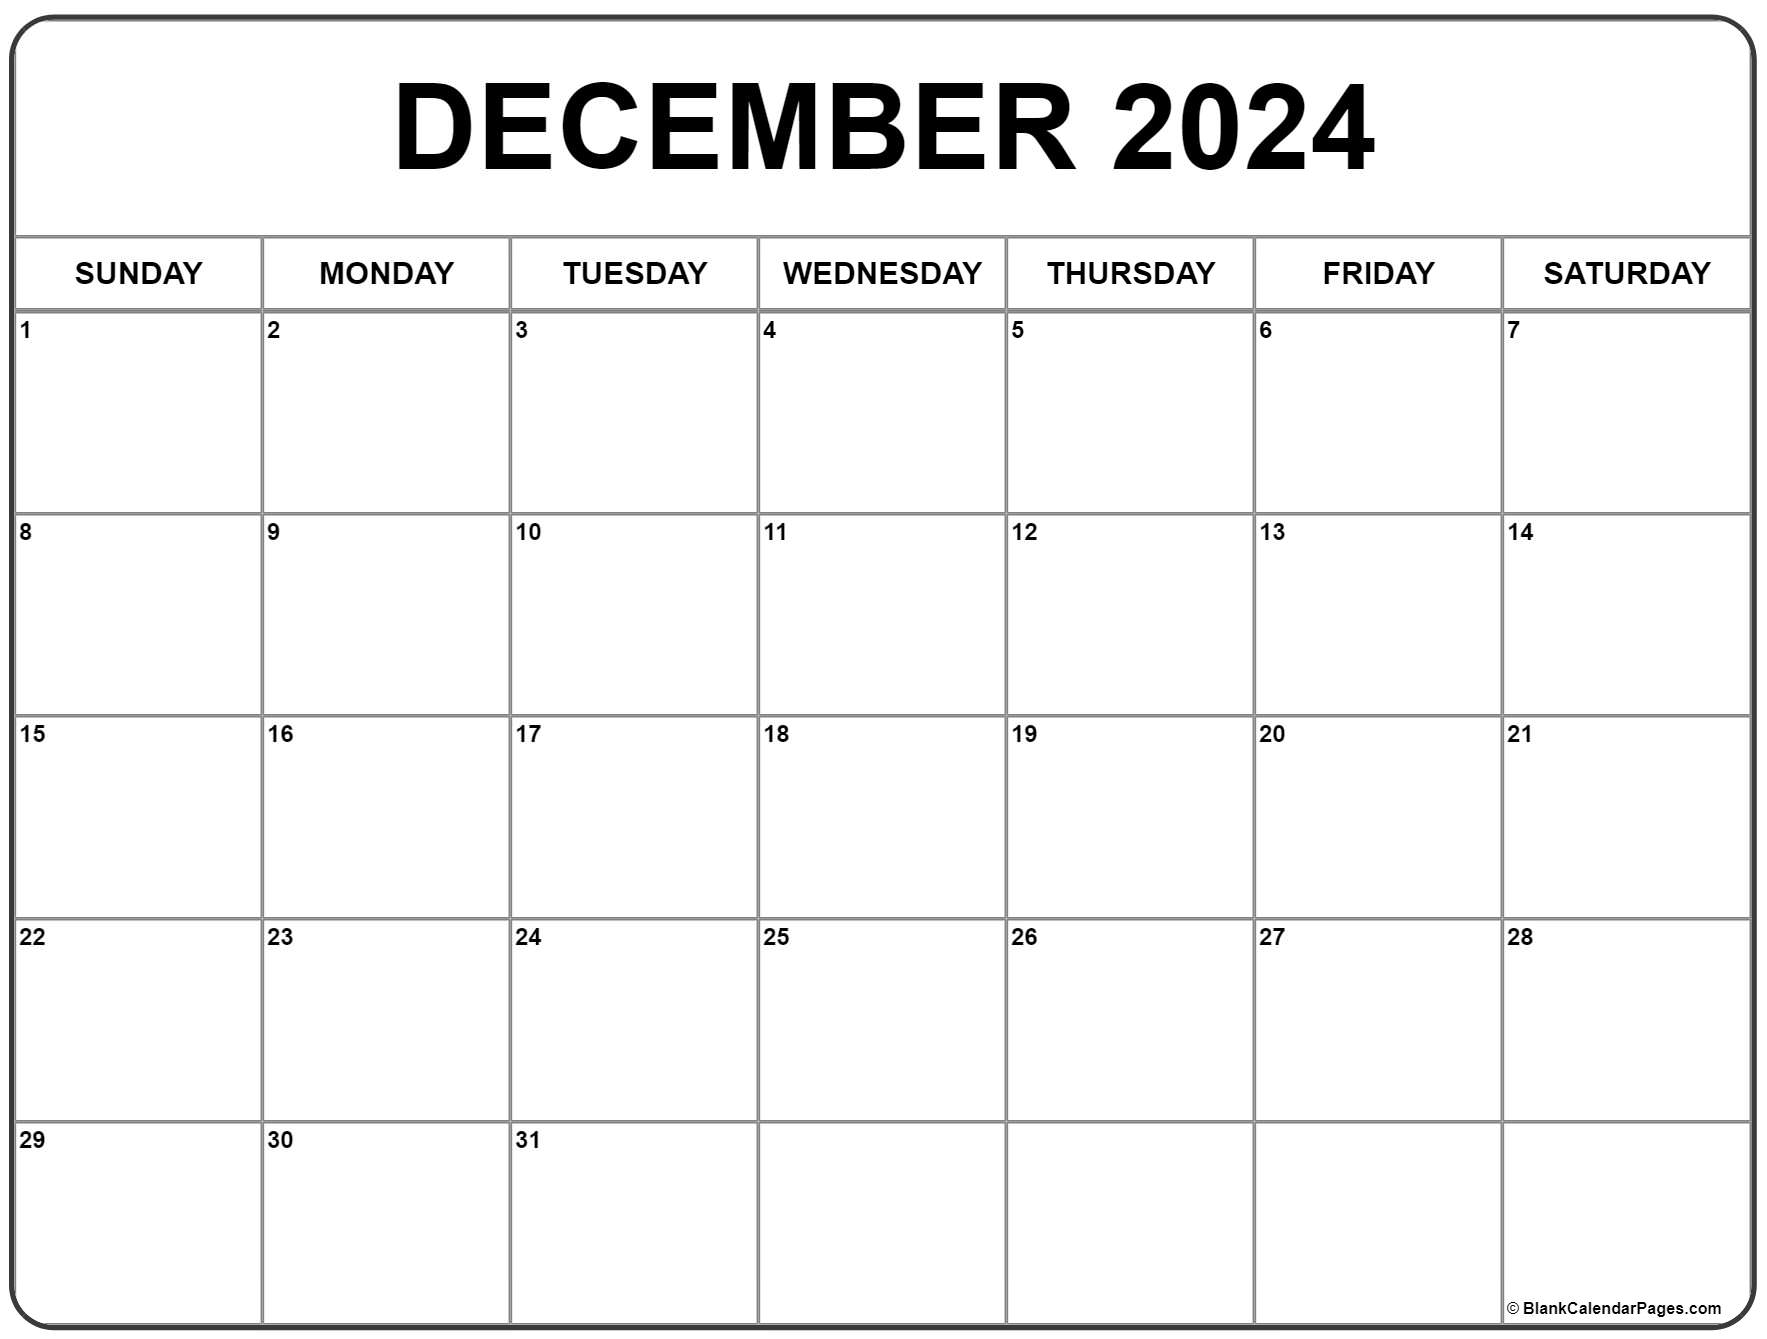 December Printable Calendar 2022 December 2022 Calendar | Free Printable Calendar Templates